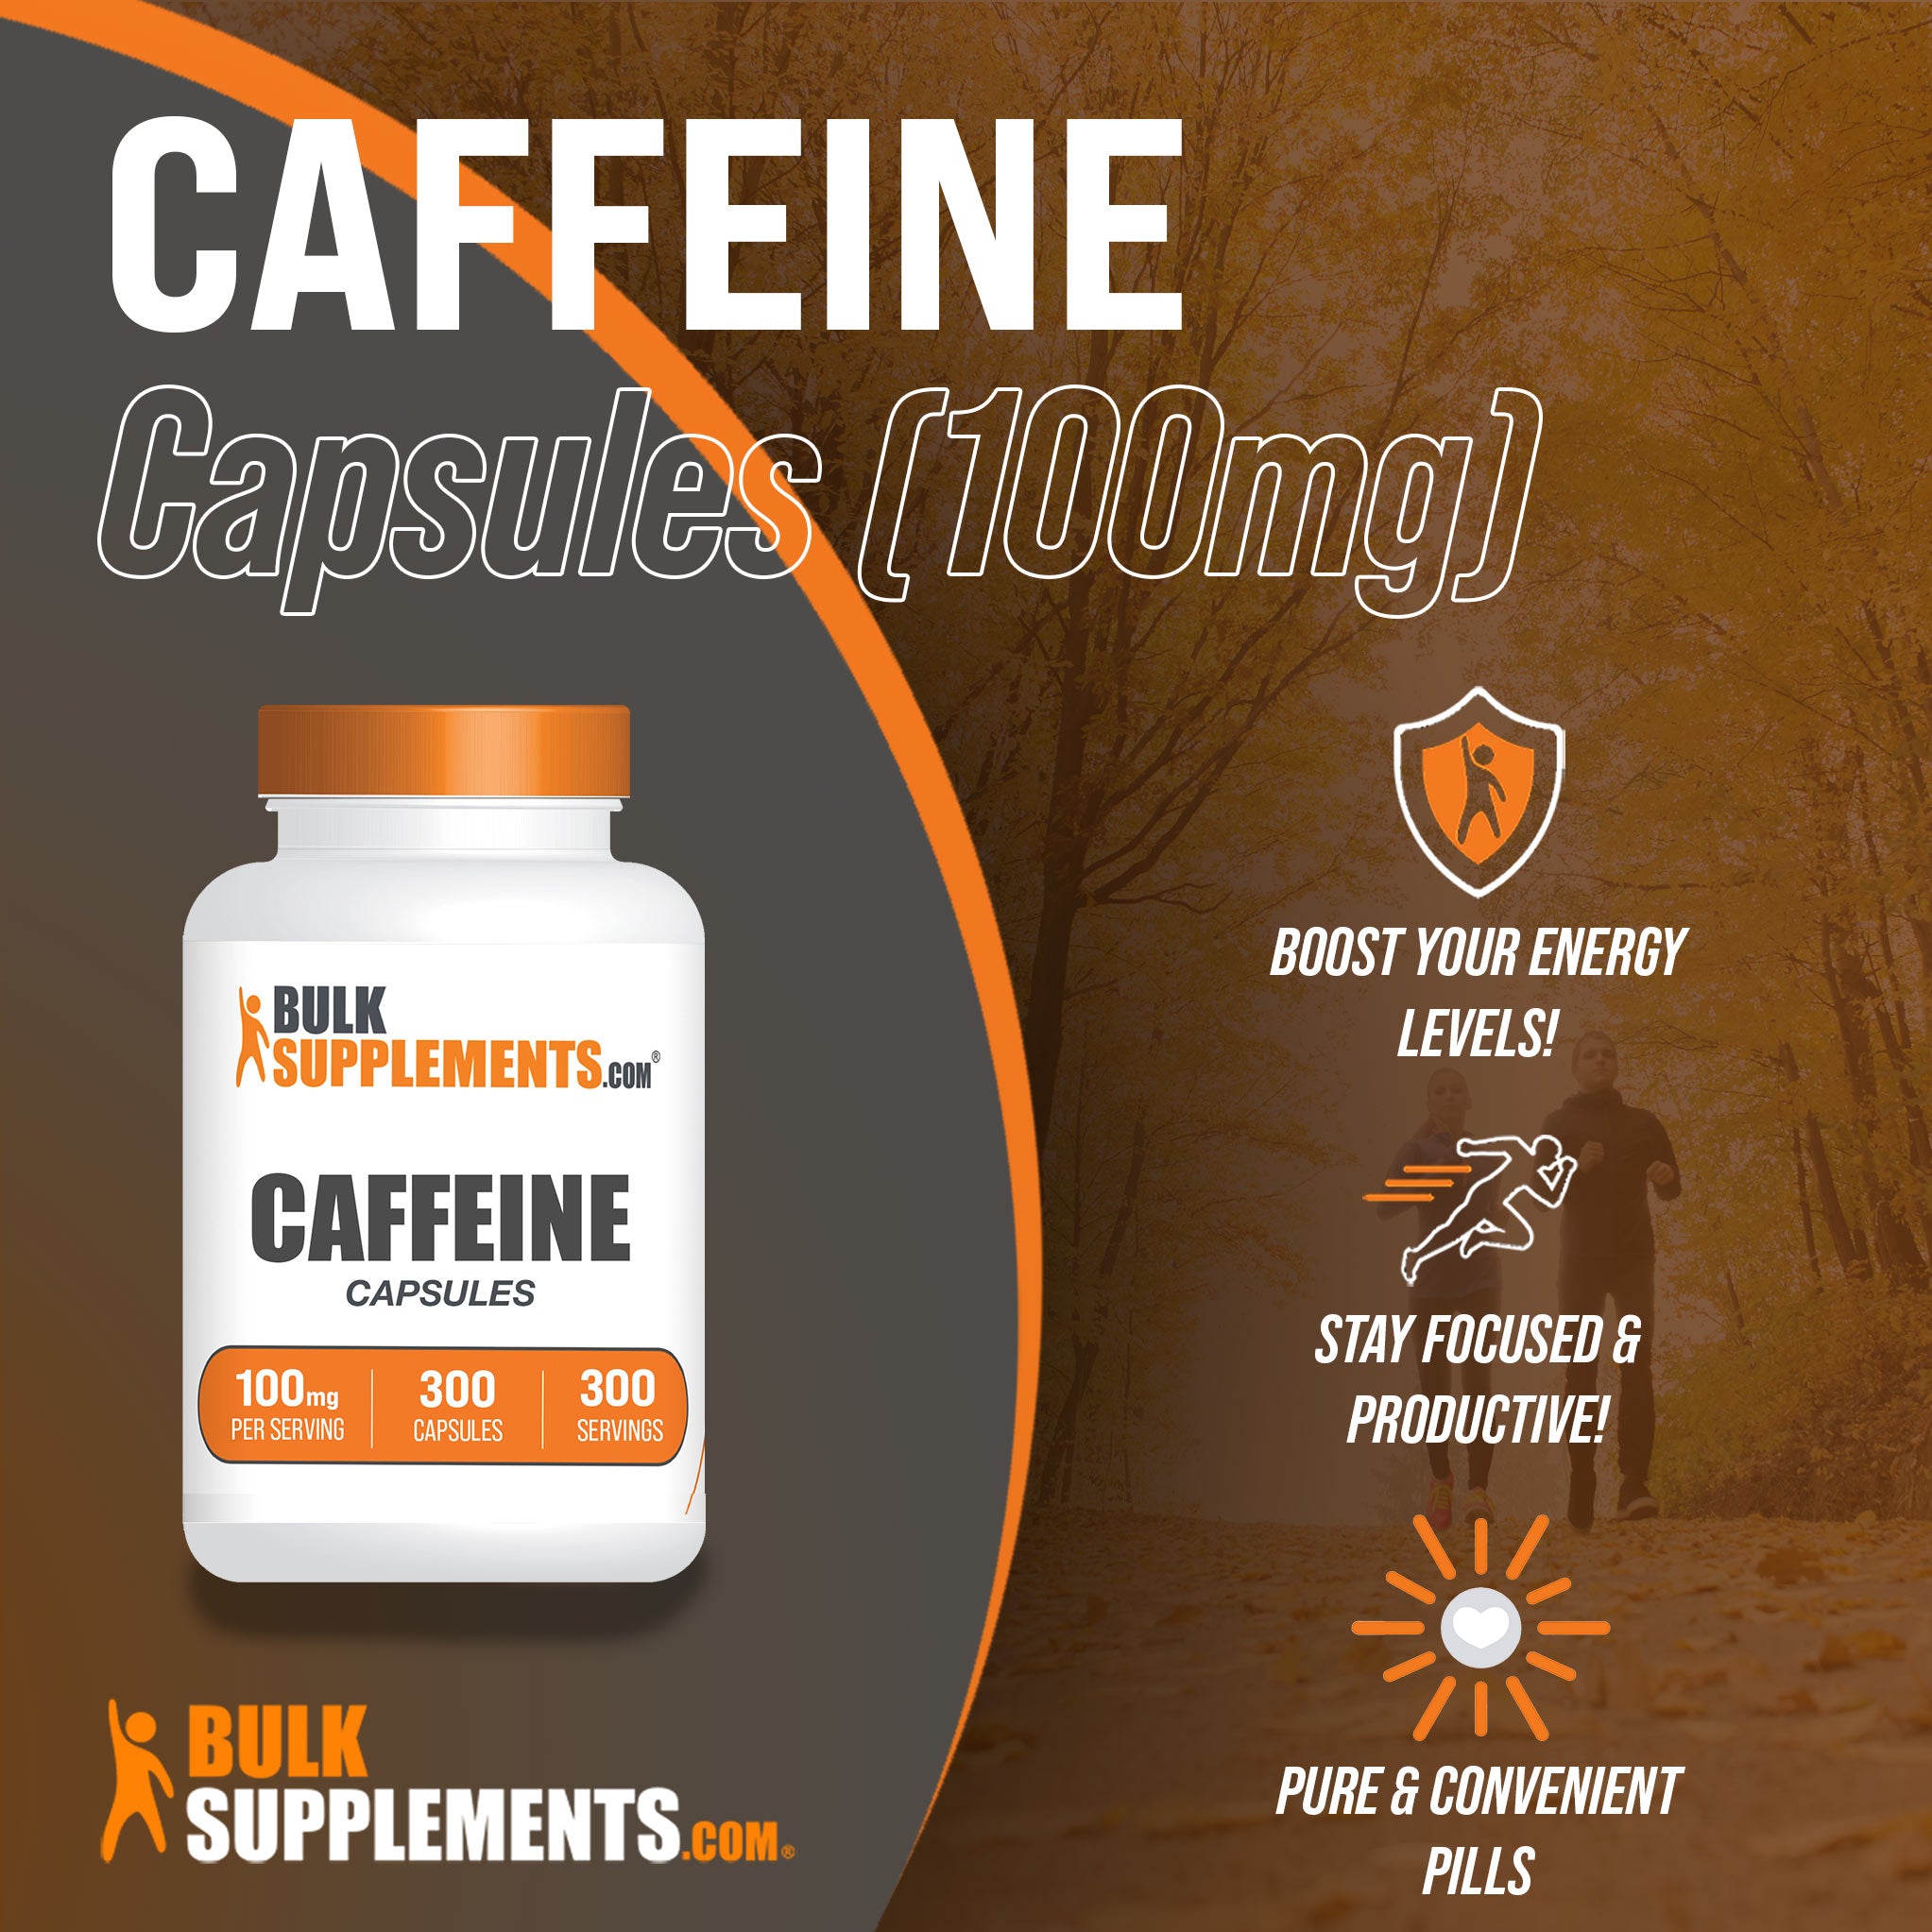 100mg 300 caffeine pills for energy boosts!